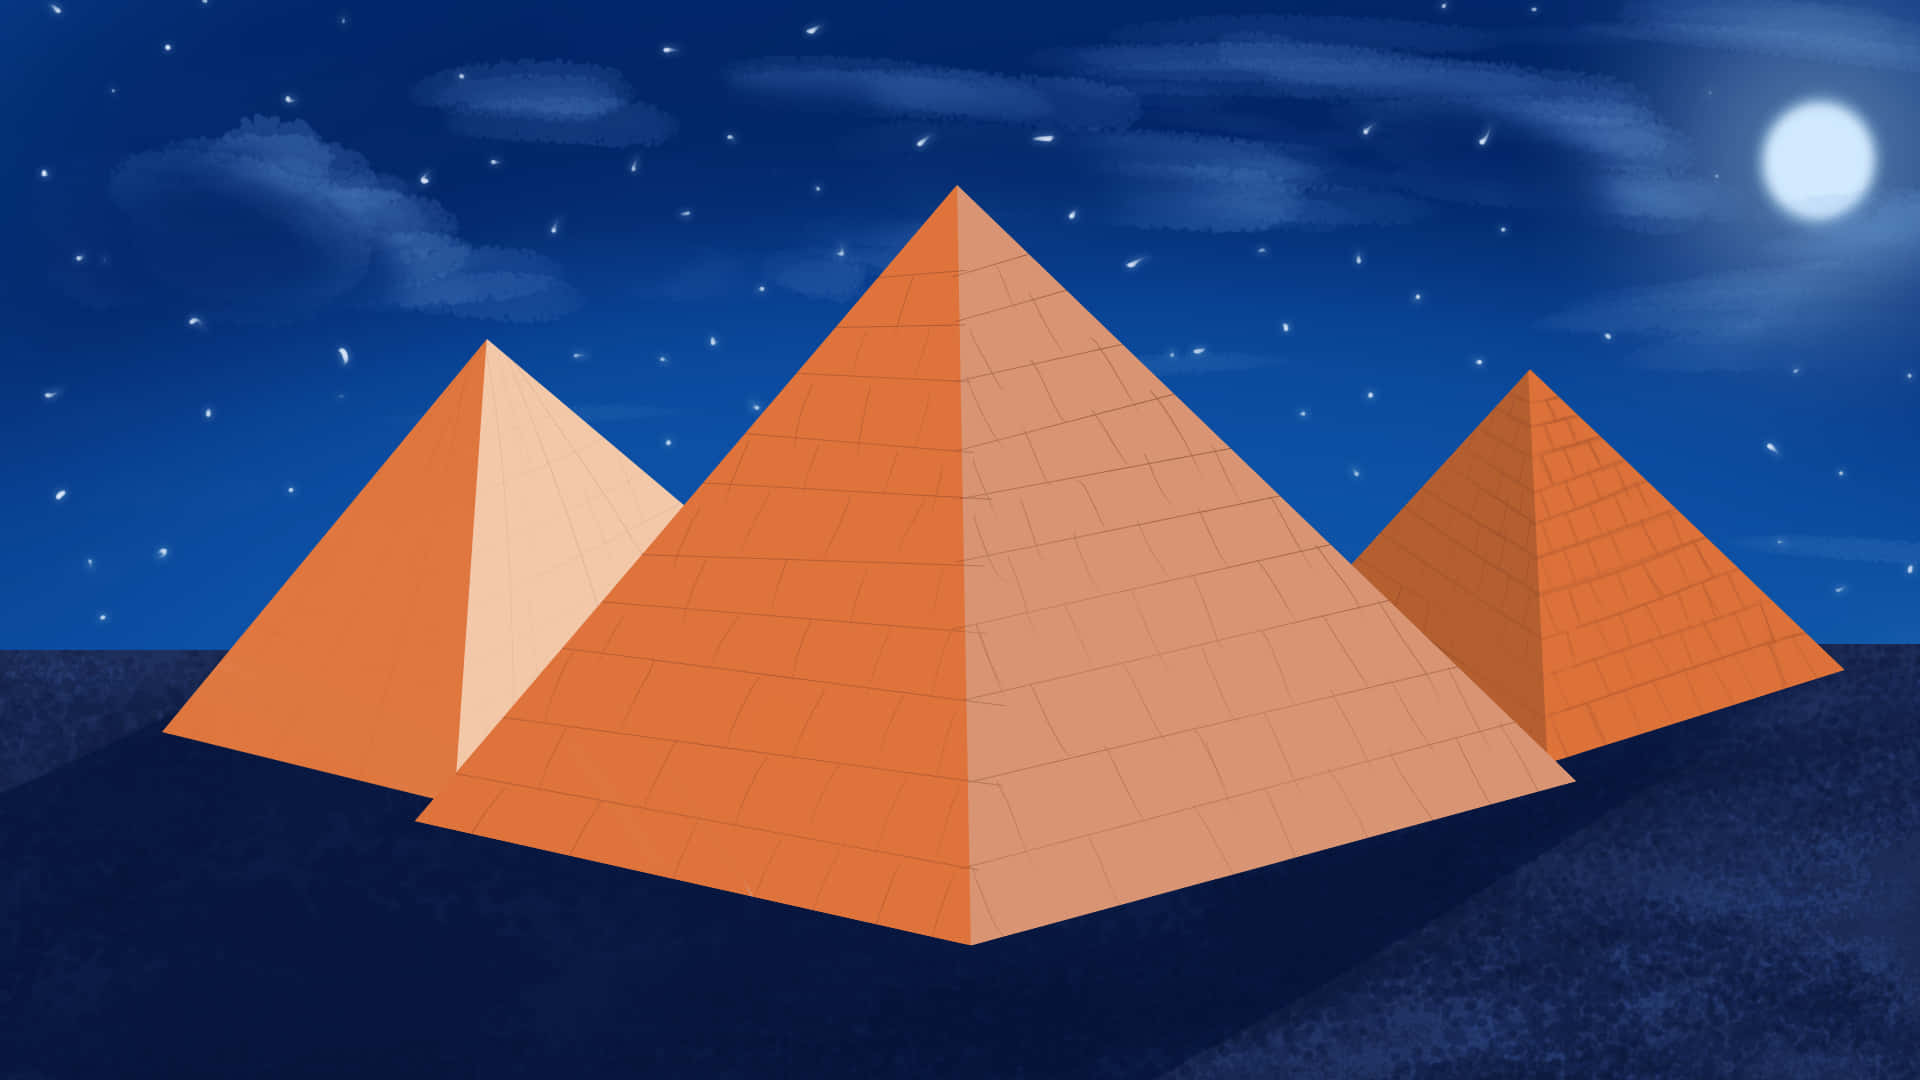 Pyramid Of The Moon Illustration Wallpaper